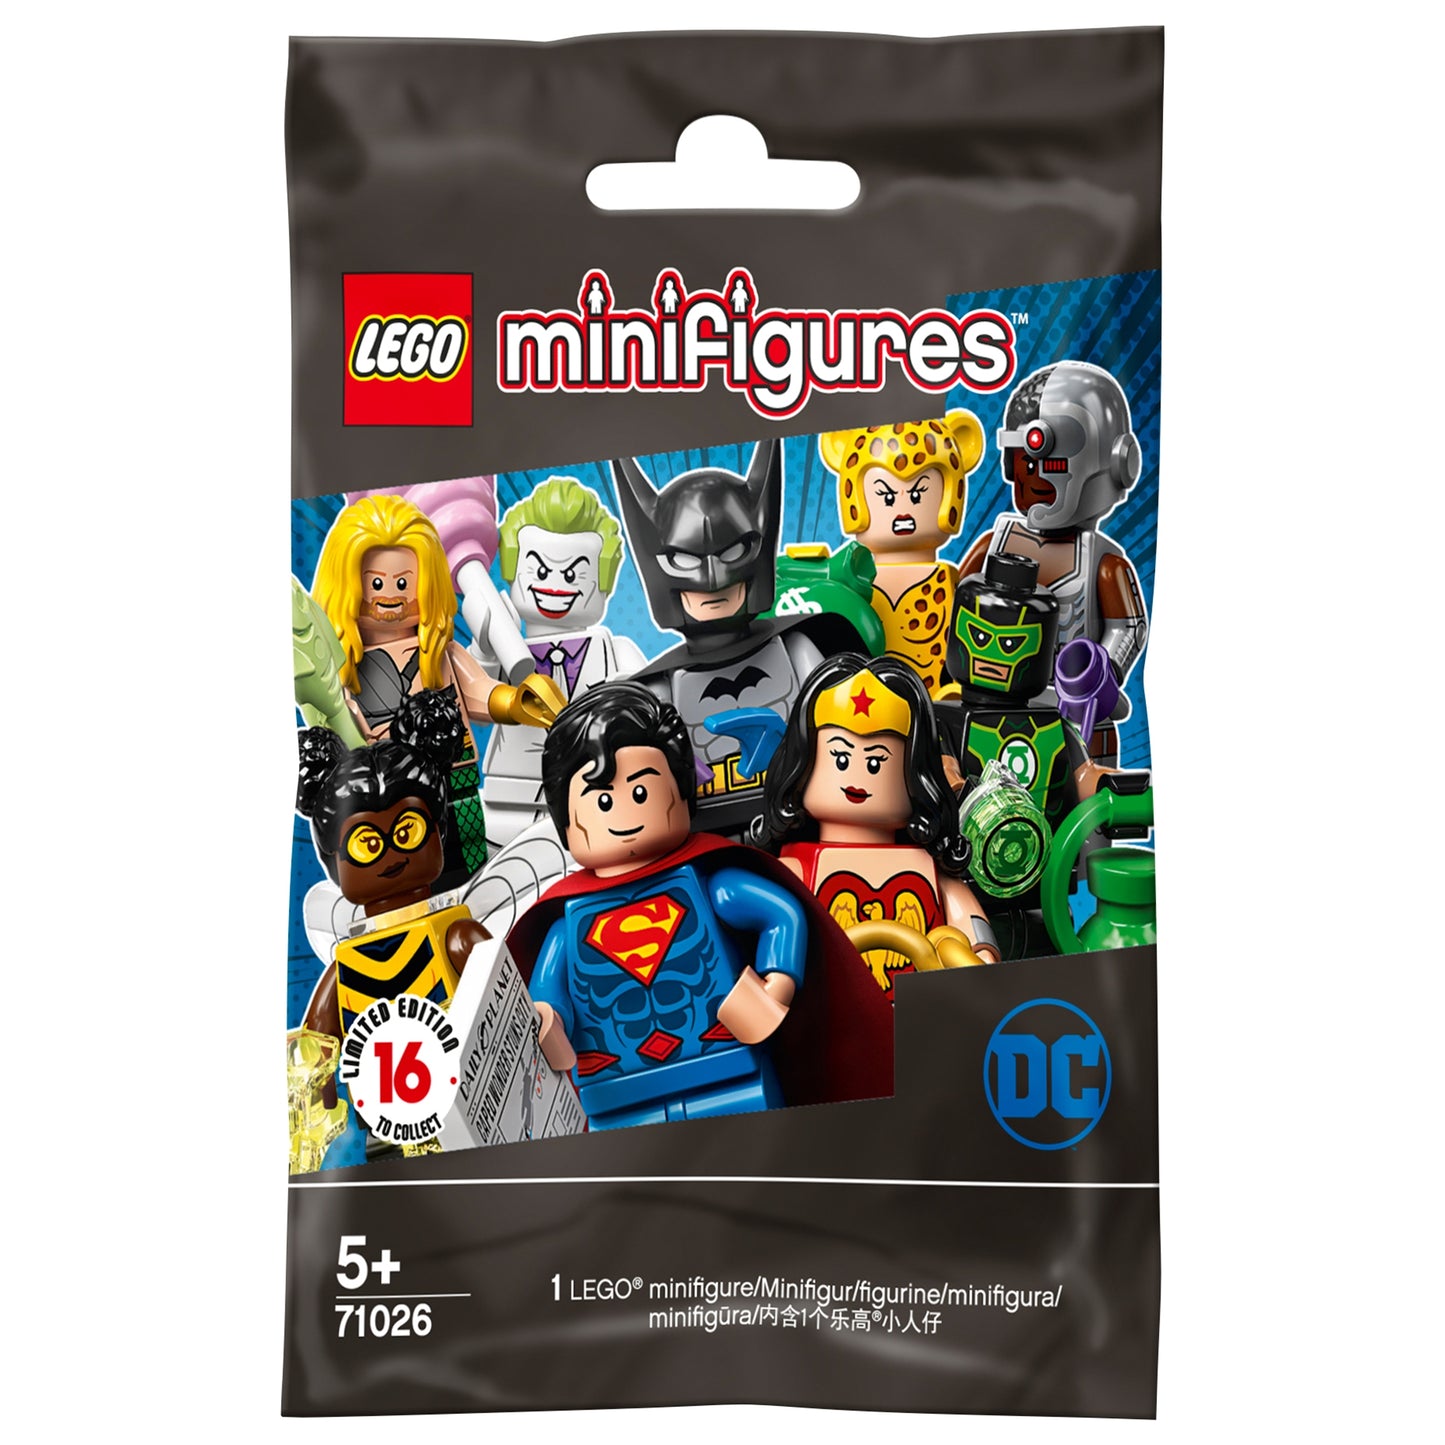 Lego Minifigures DC Super Heroes 71026